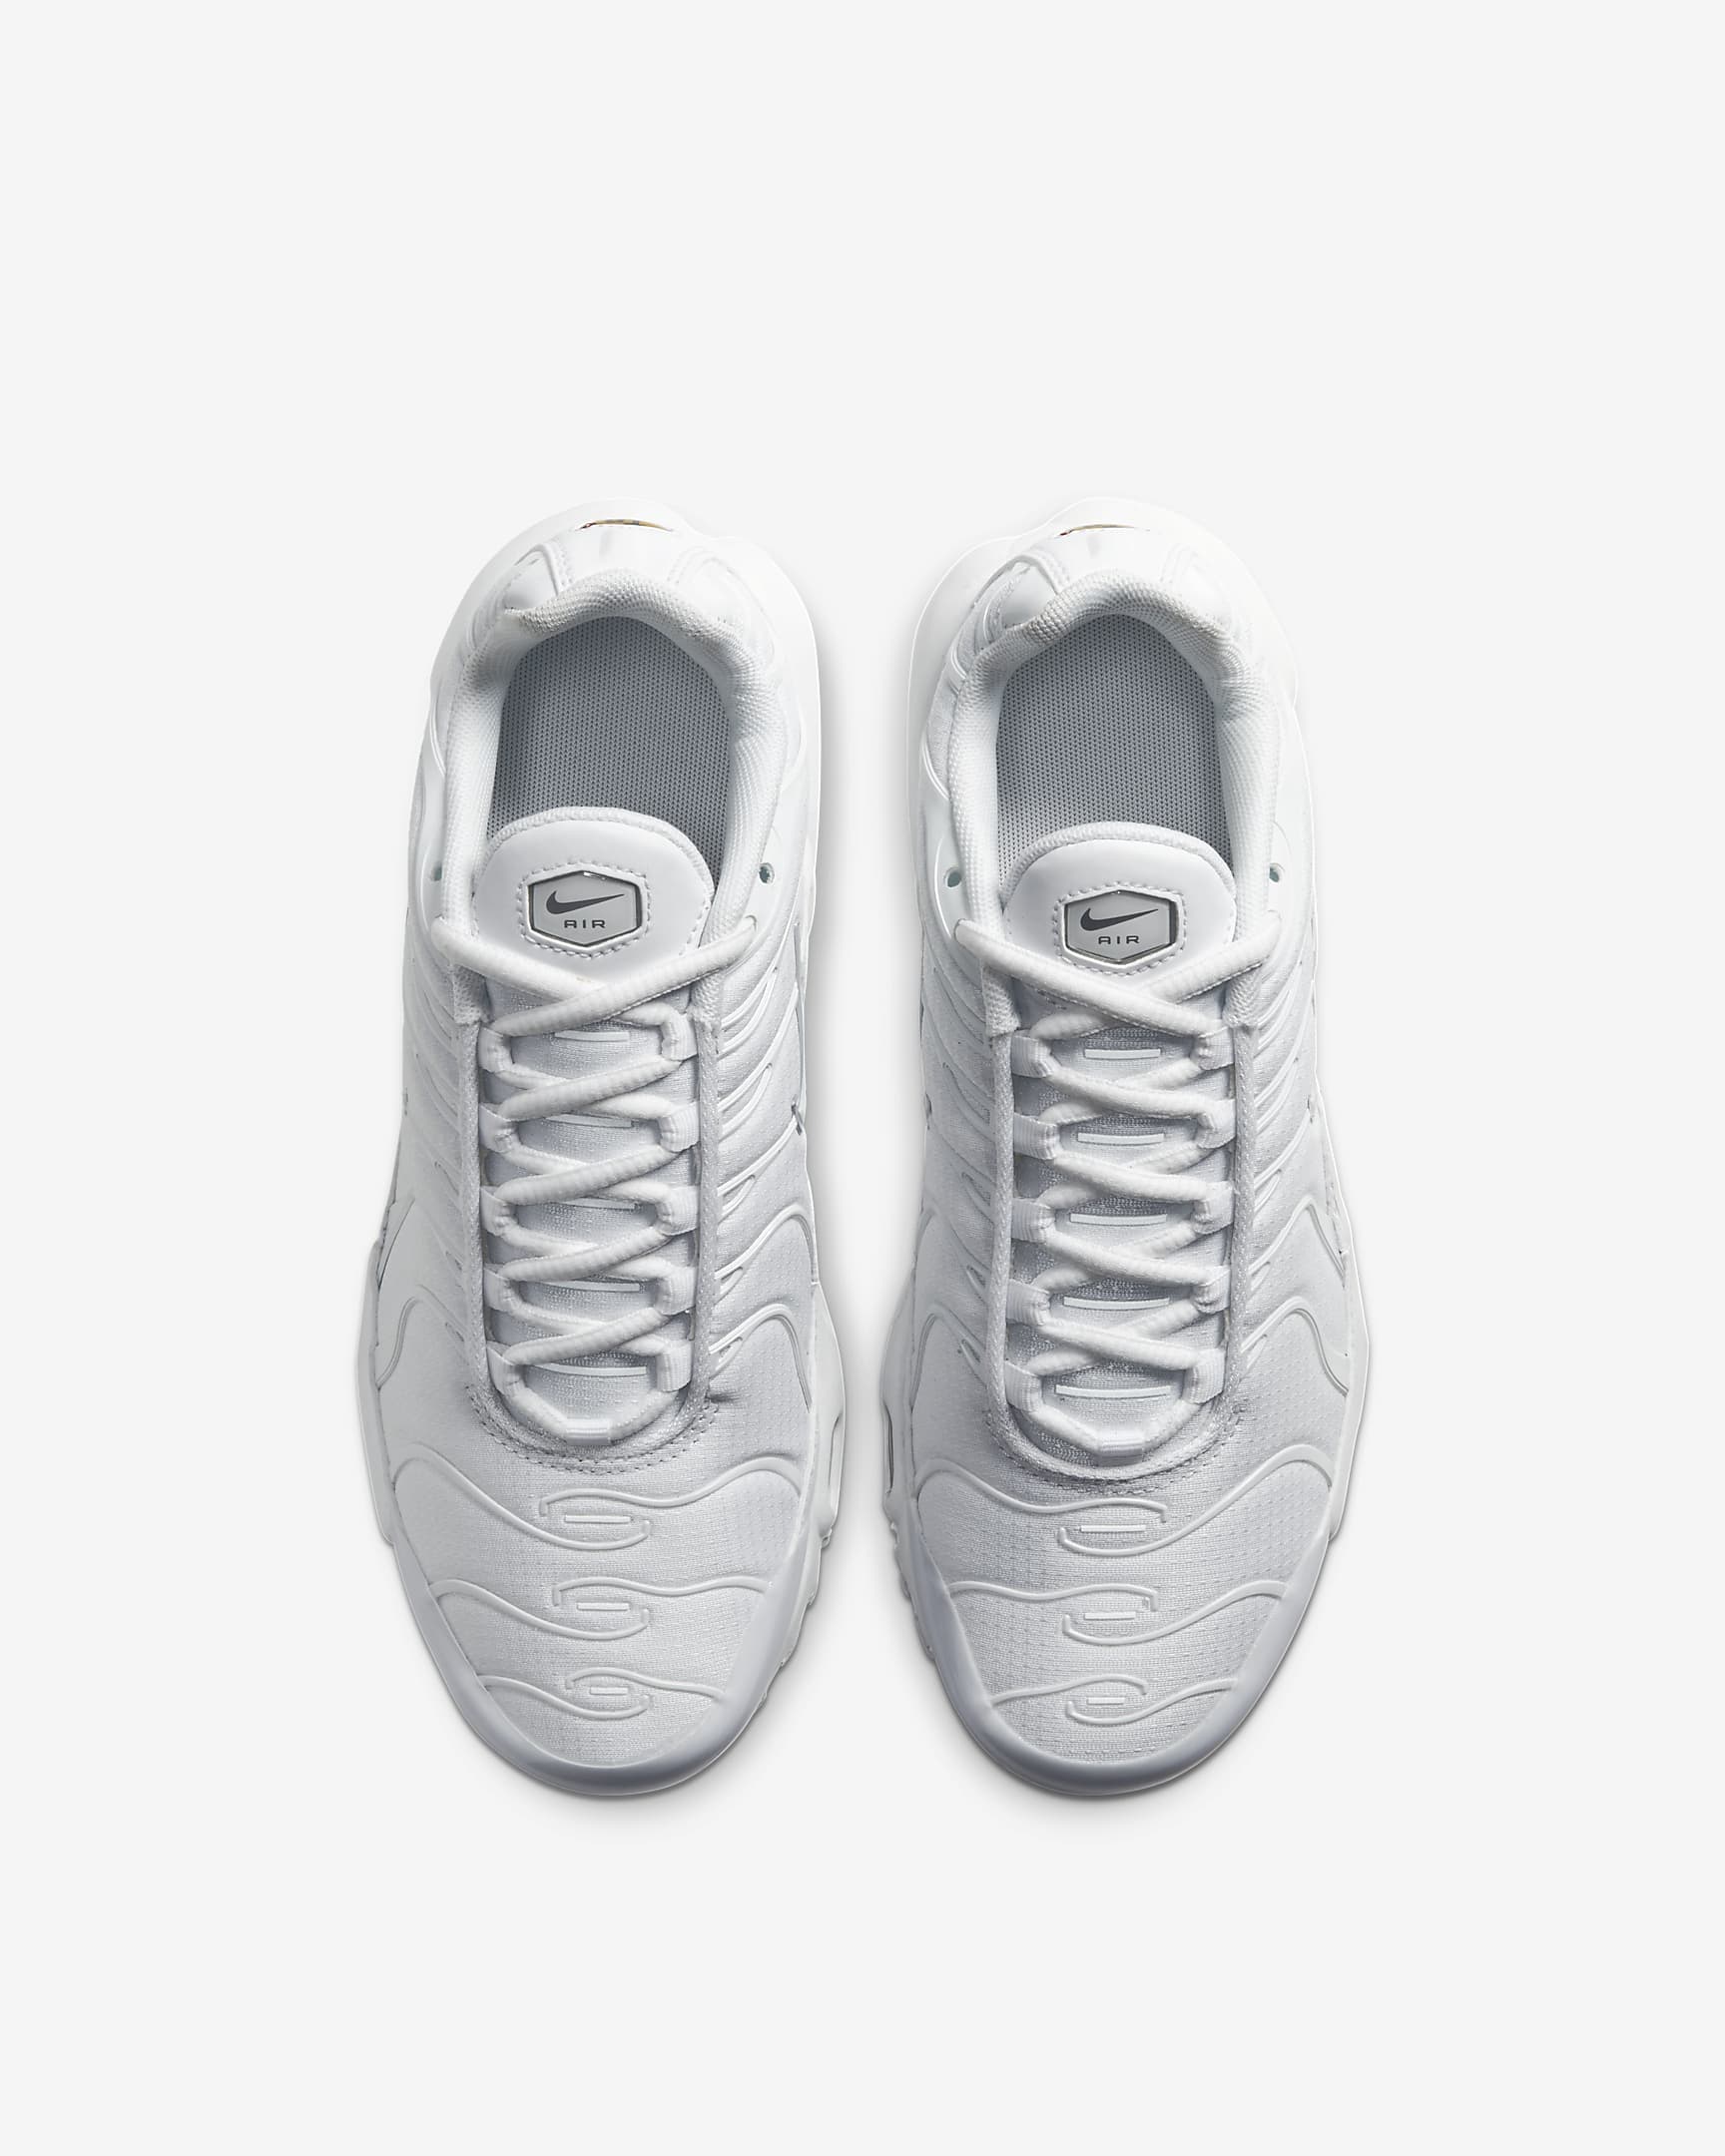 Bota Nike Air Max Plus pro větší děti - Bílá/Metallic Silver/Bílá